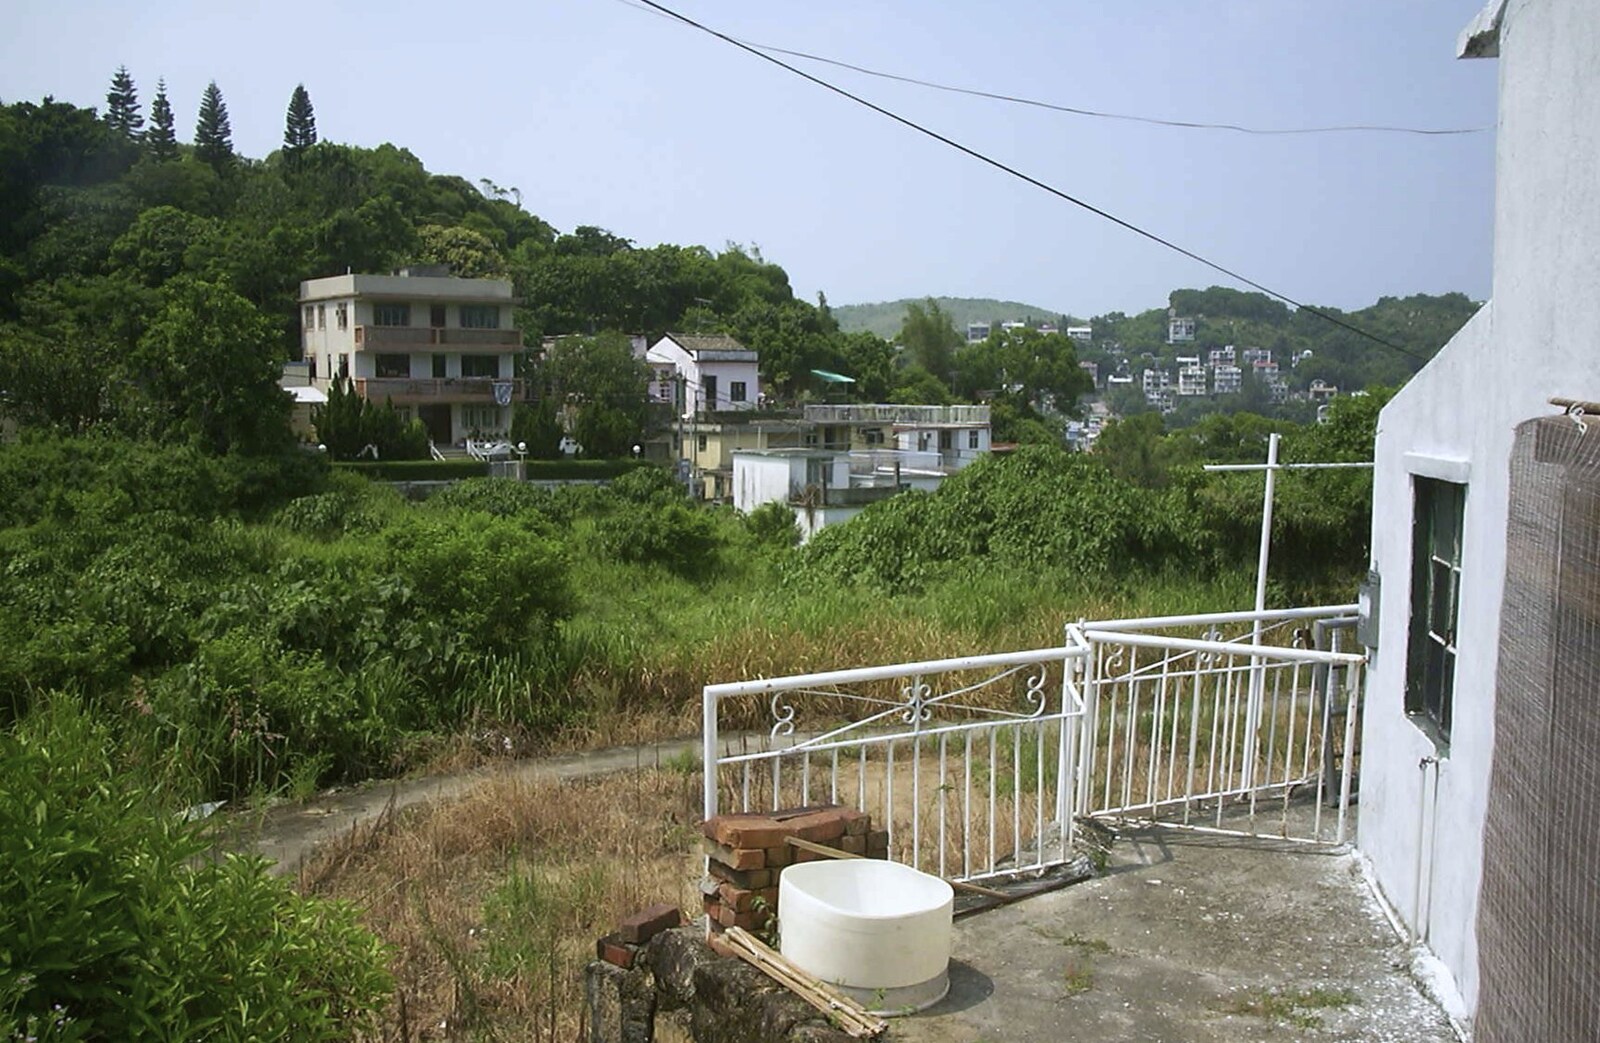 Lamma Island, Hong Kong, China - 20th August 2001: A random view of the village